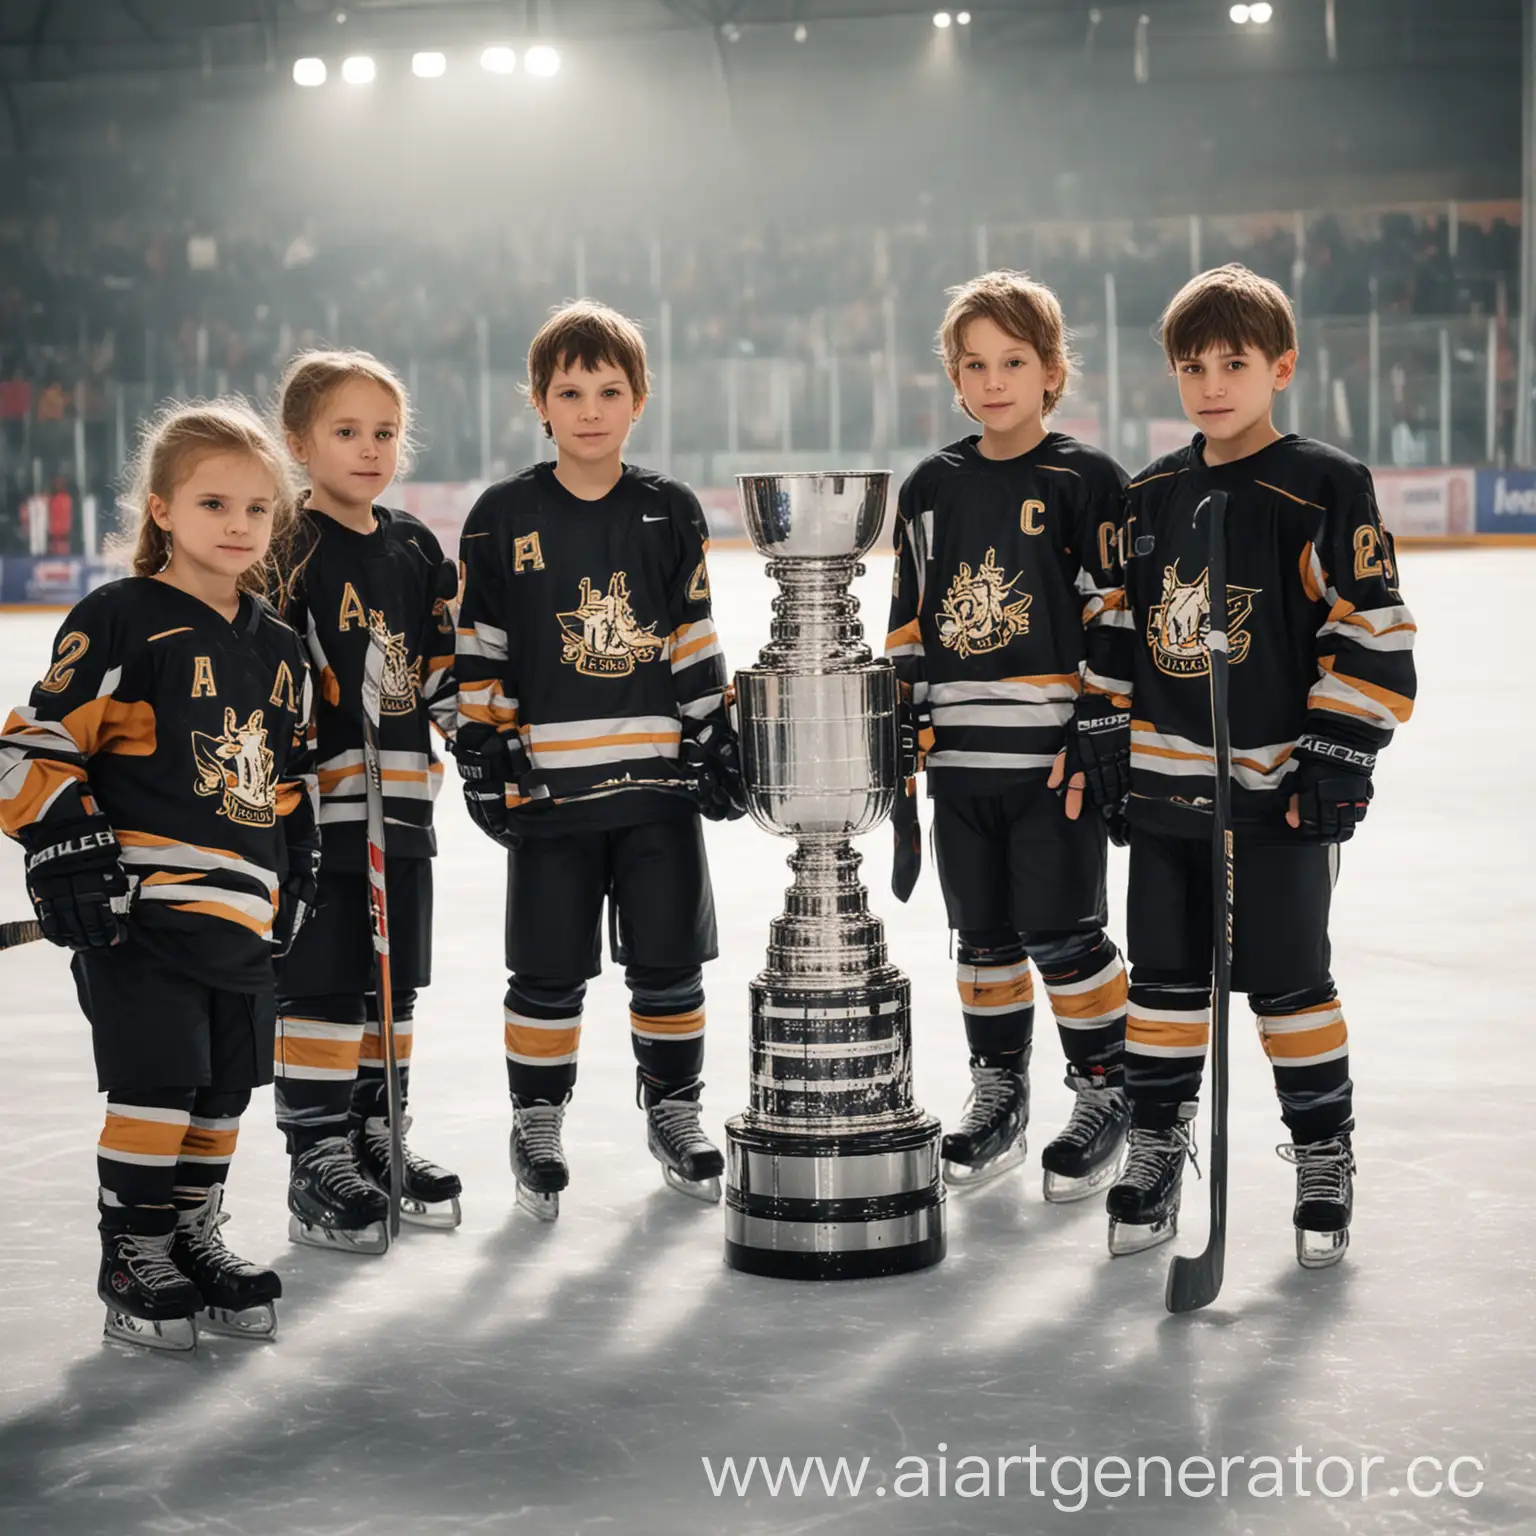 Children-Hockey-Champions-Celebrating-Victory-on-Ice